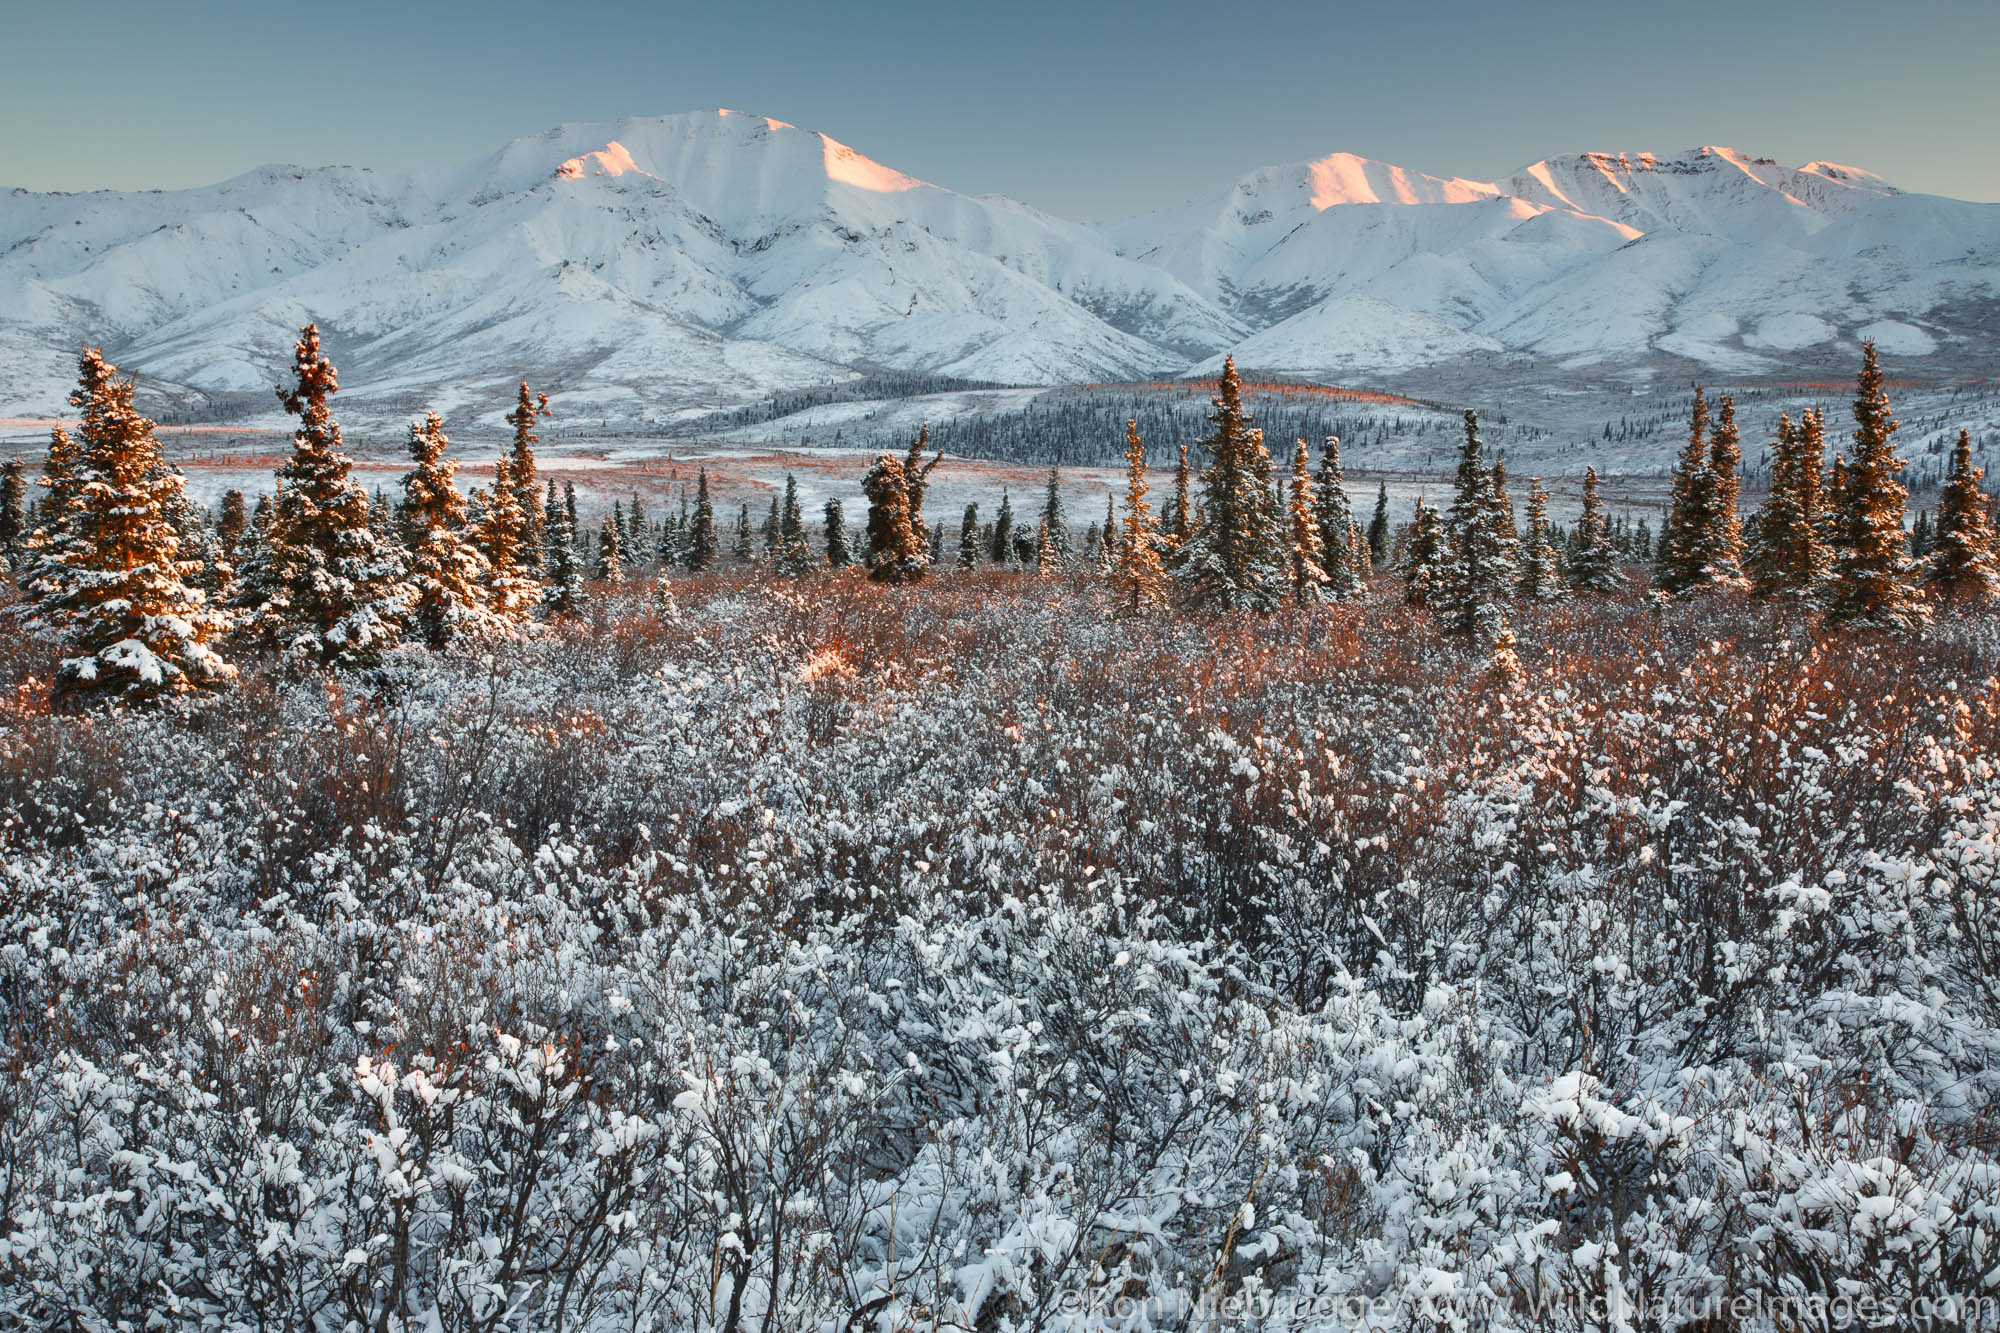 Winter in Denali National Park, Alaska.